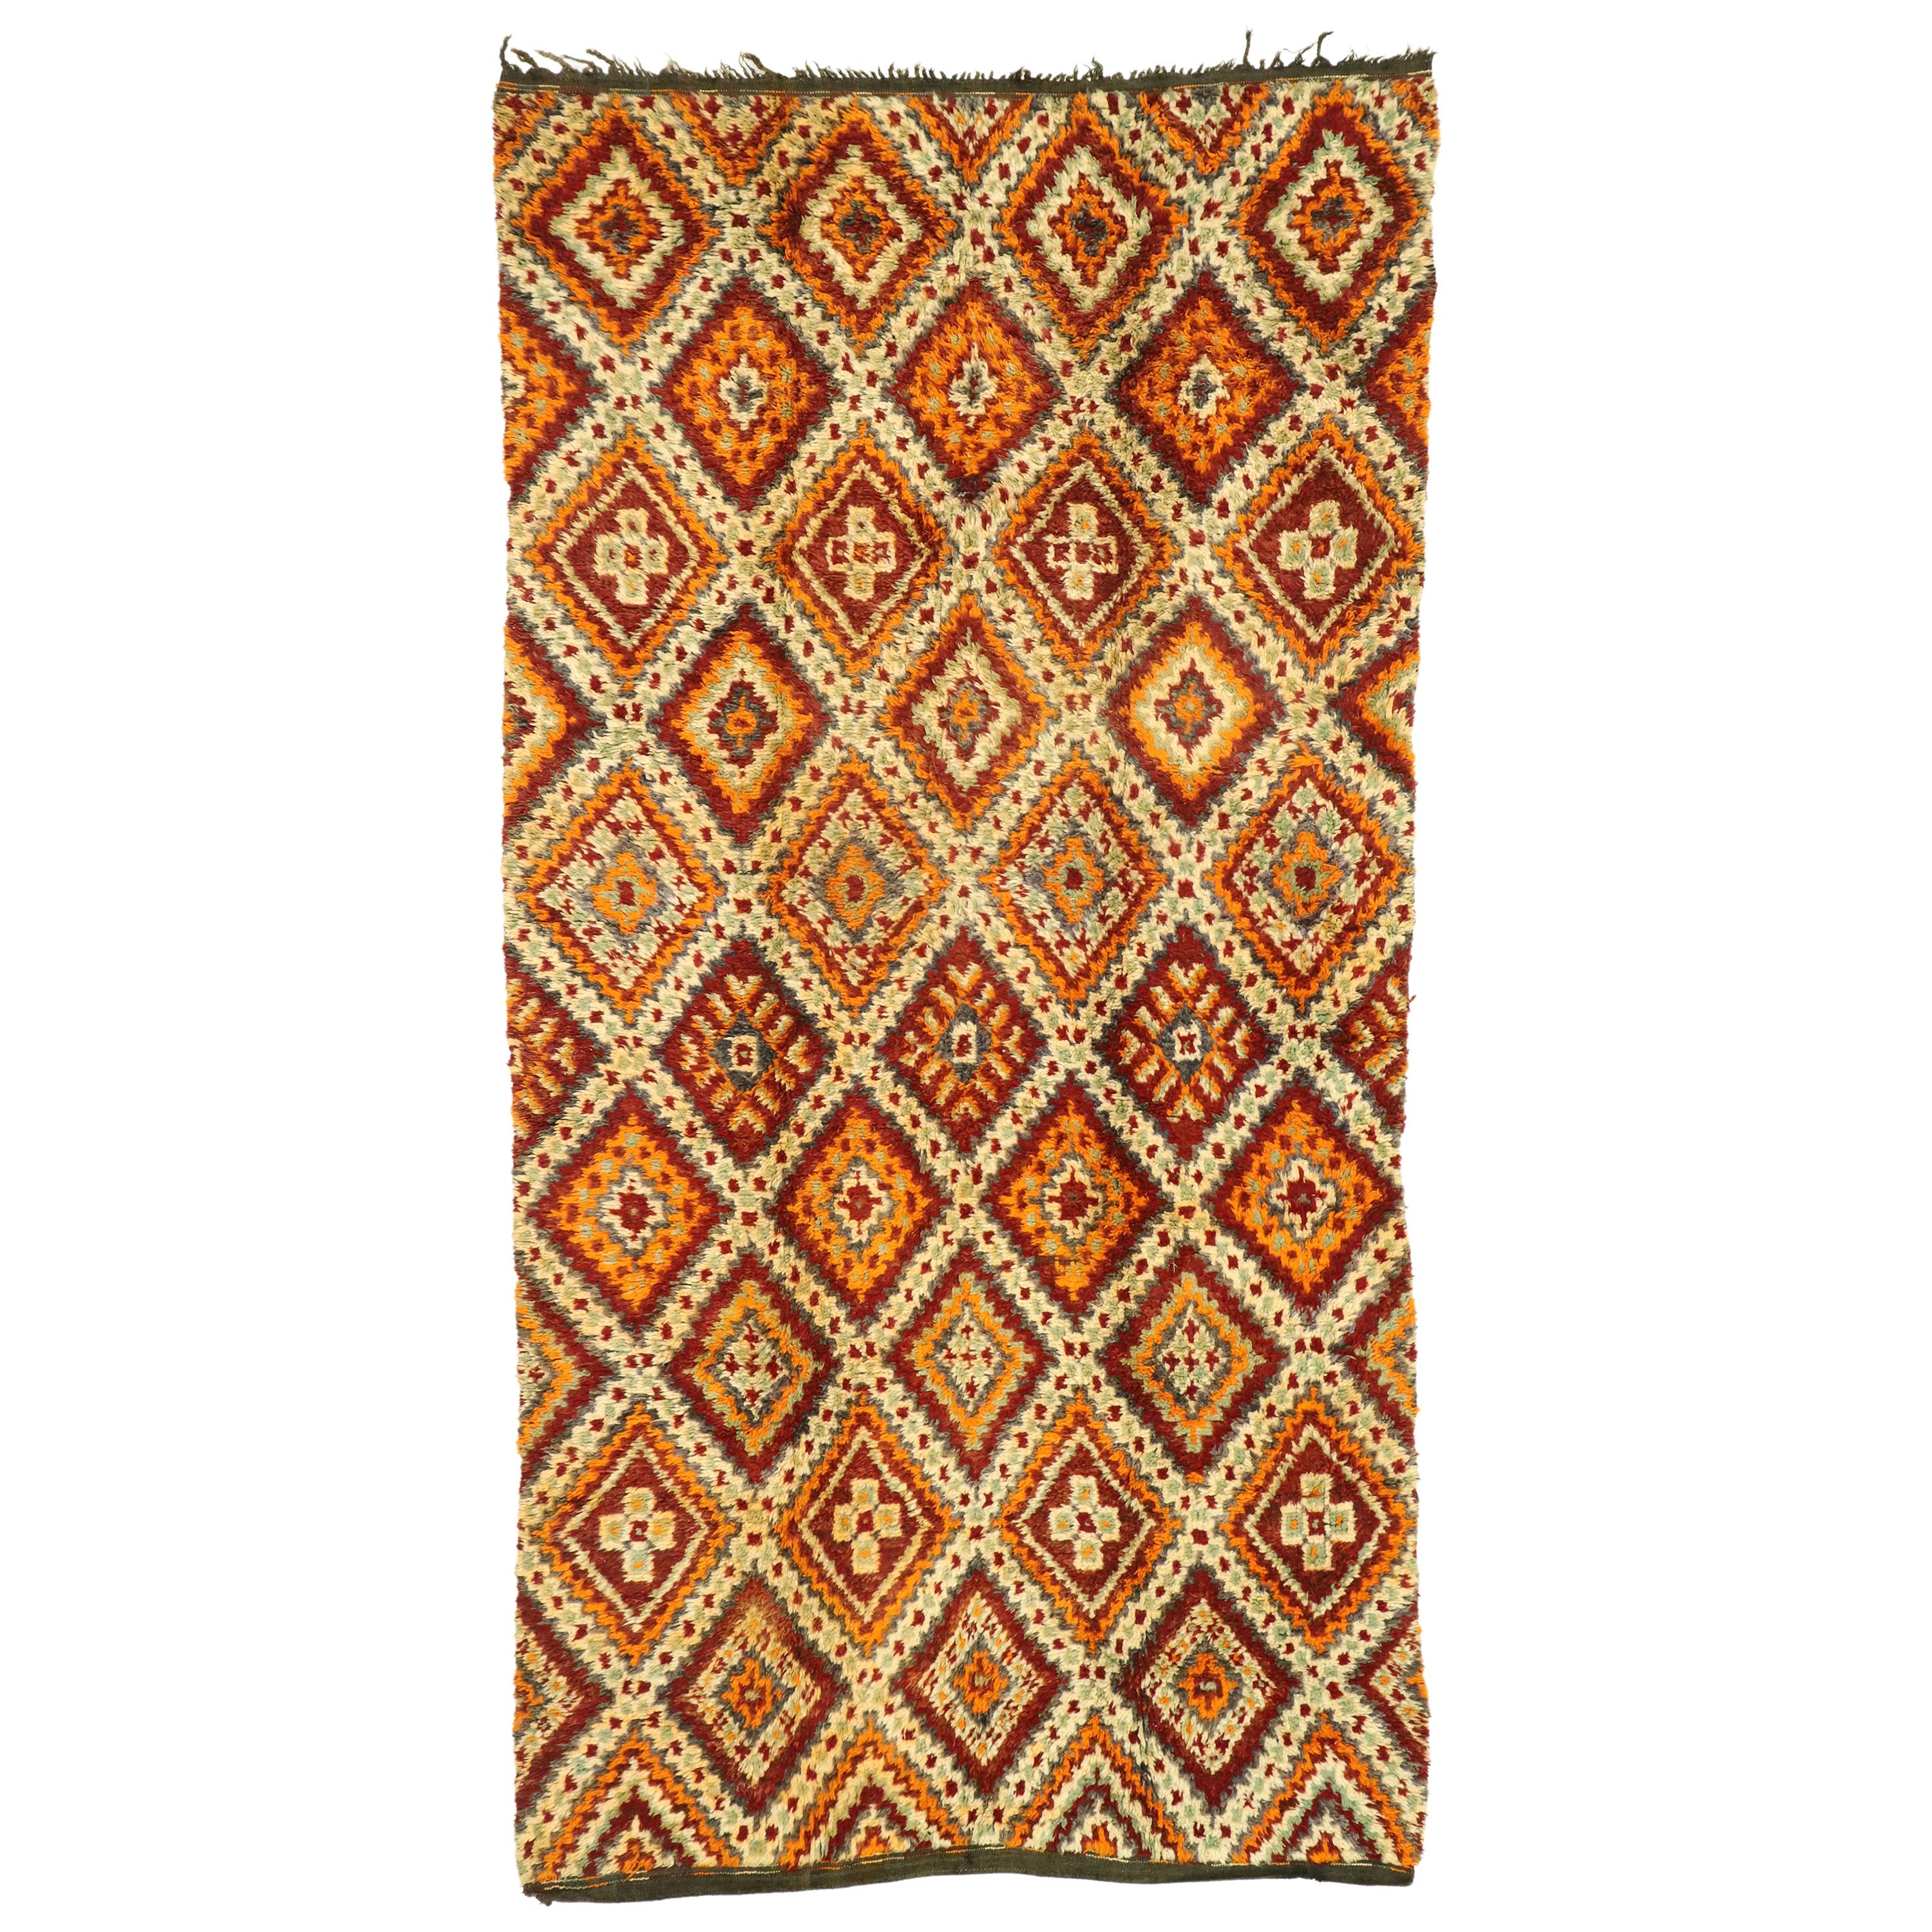 Vintage Berber Taznakht Moroccan Rug with Modern Northwestern Style